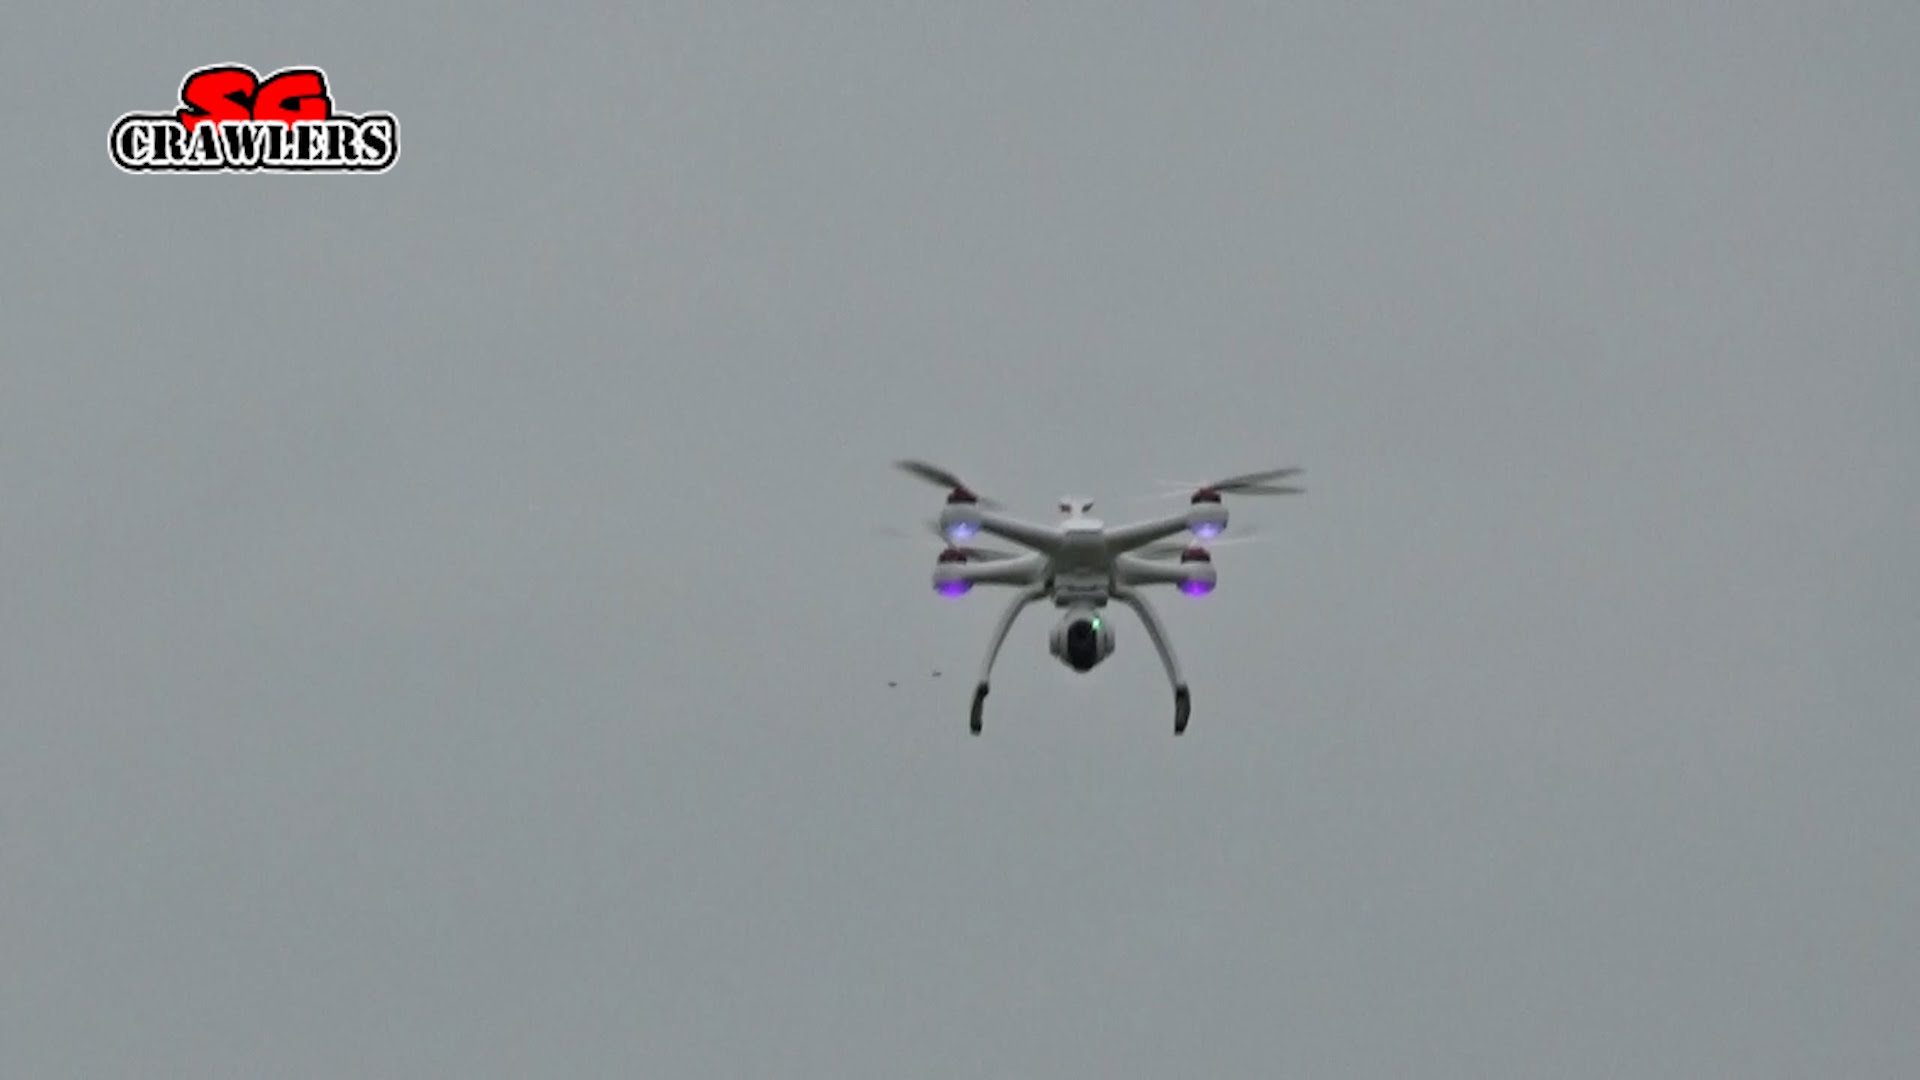 Blade Chroma with CGO2+ Aerial Quadcopter video drone test flight